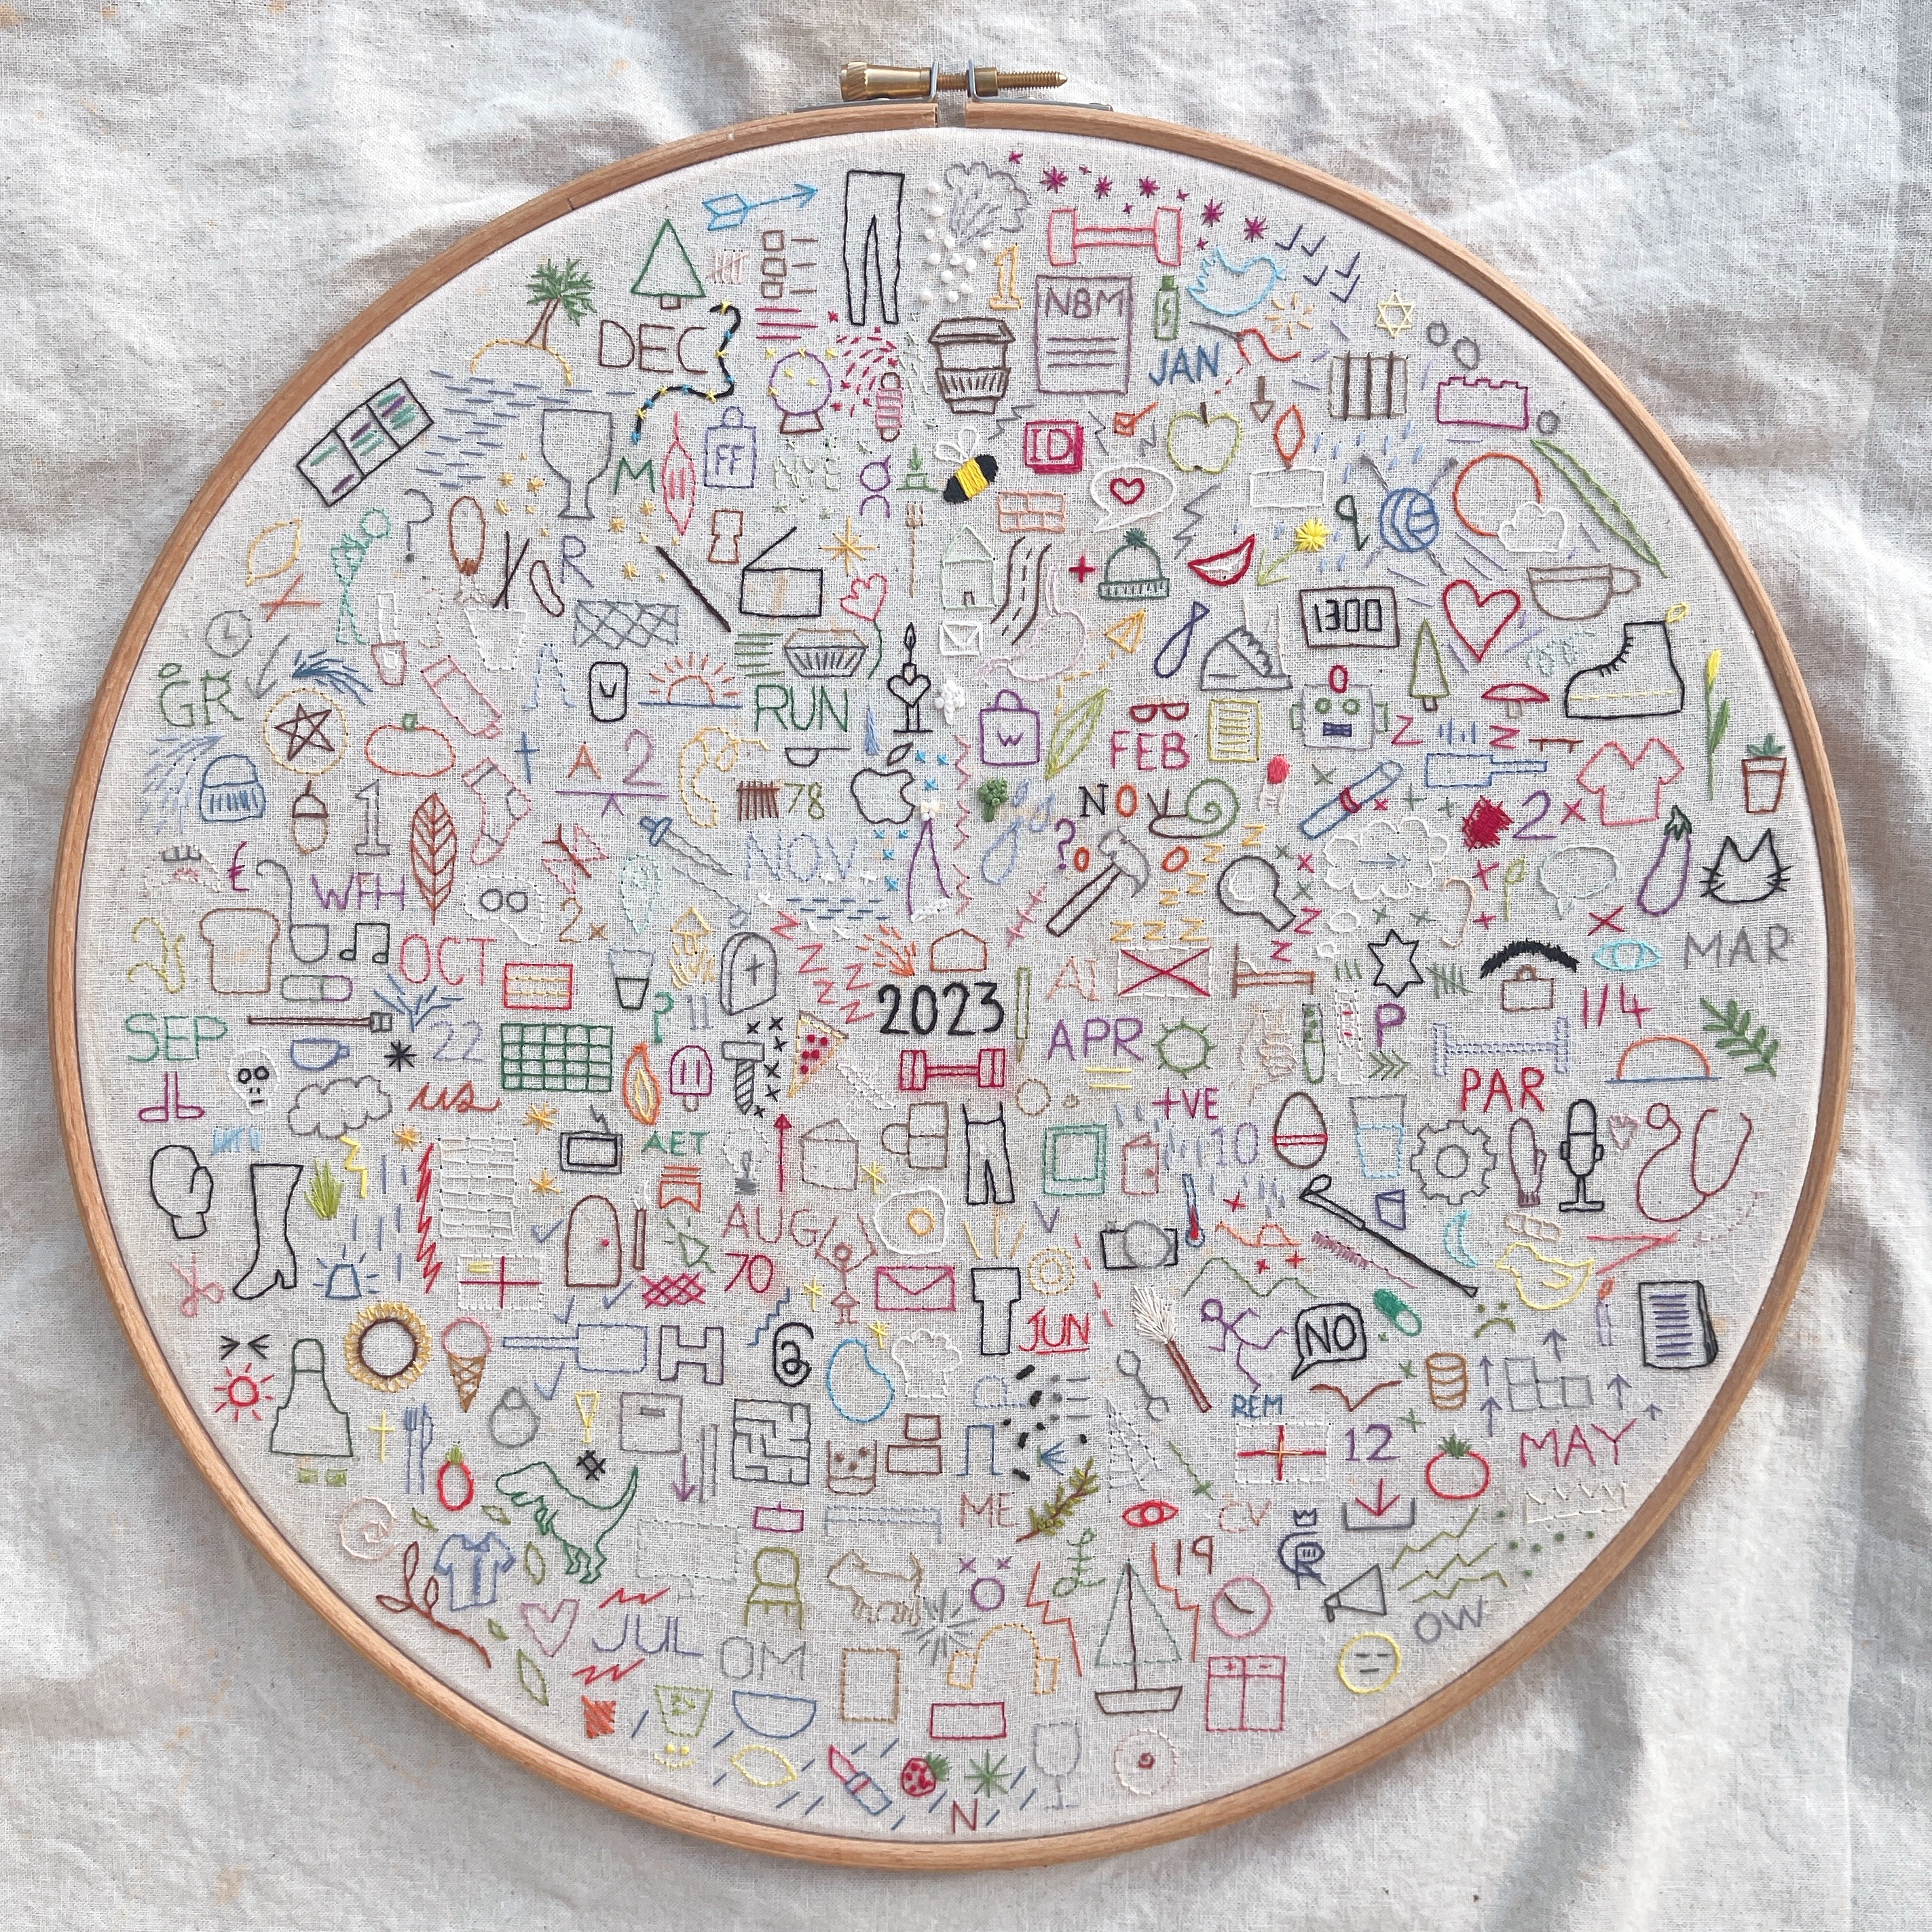 Embroidered circular journal